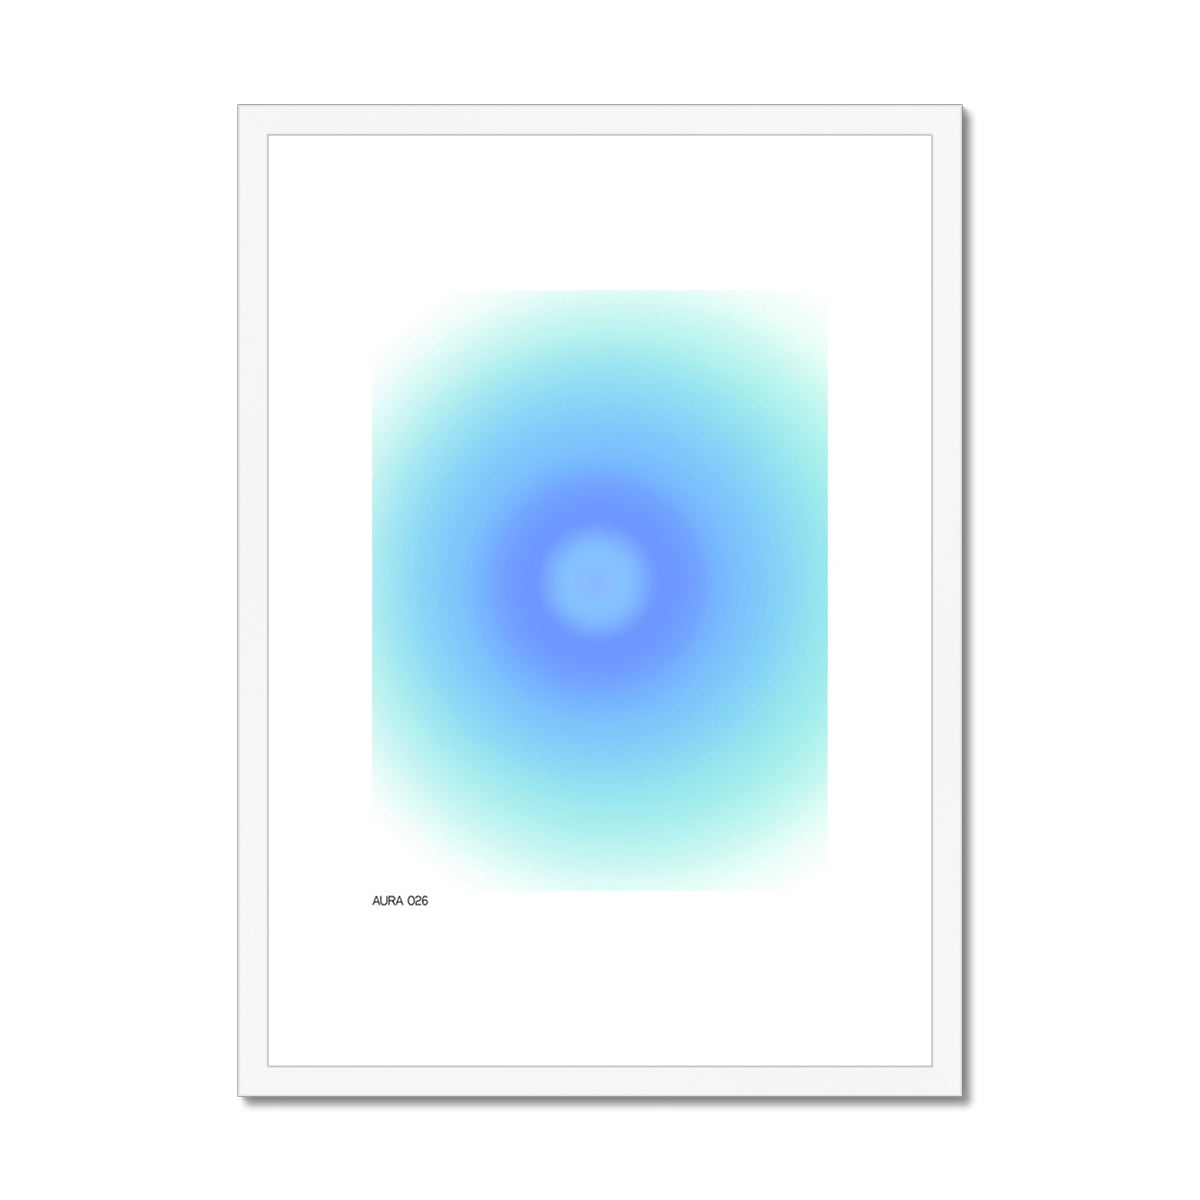 aura 026 Framed & Mounted Print